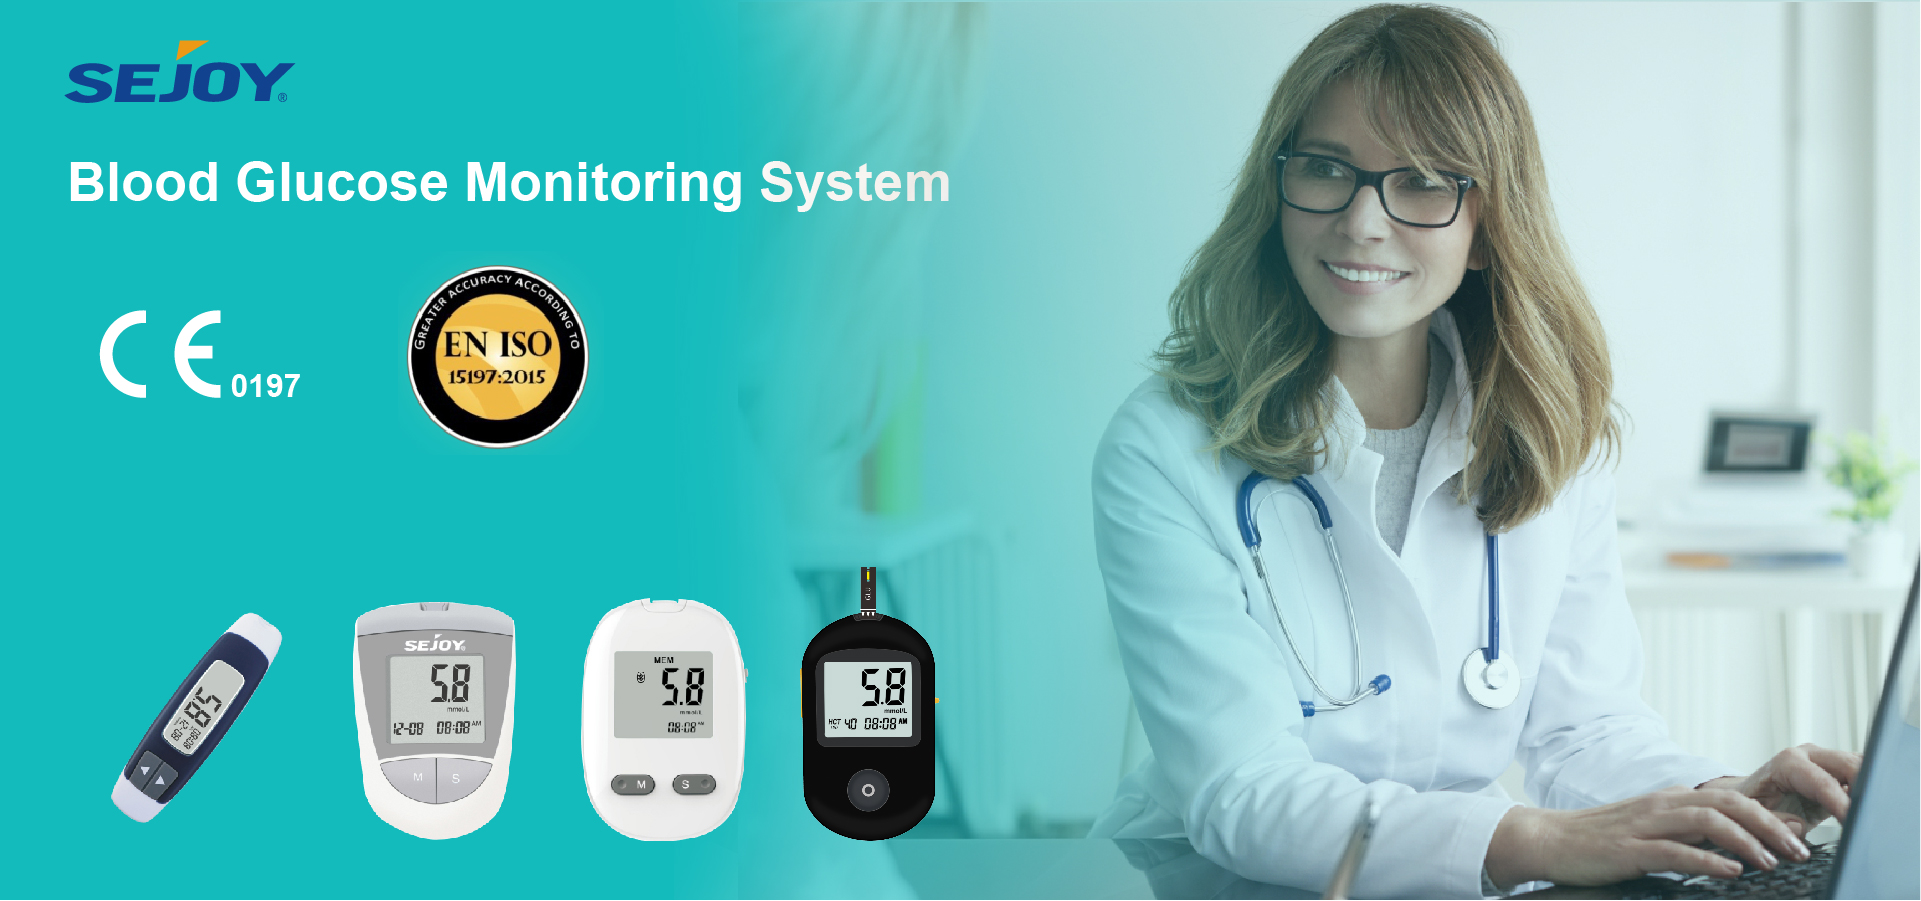 https://www.sejoy.com/blood-glucose-monitoring-system/